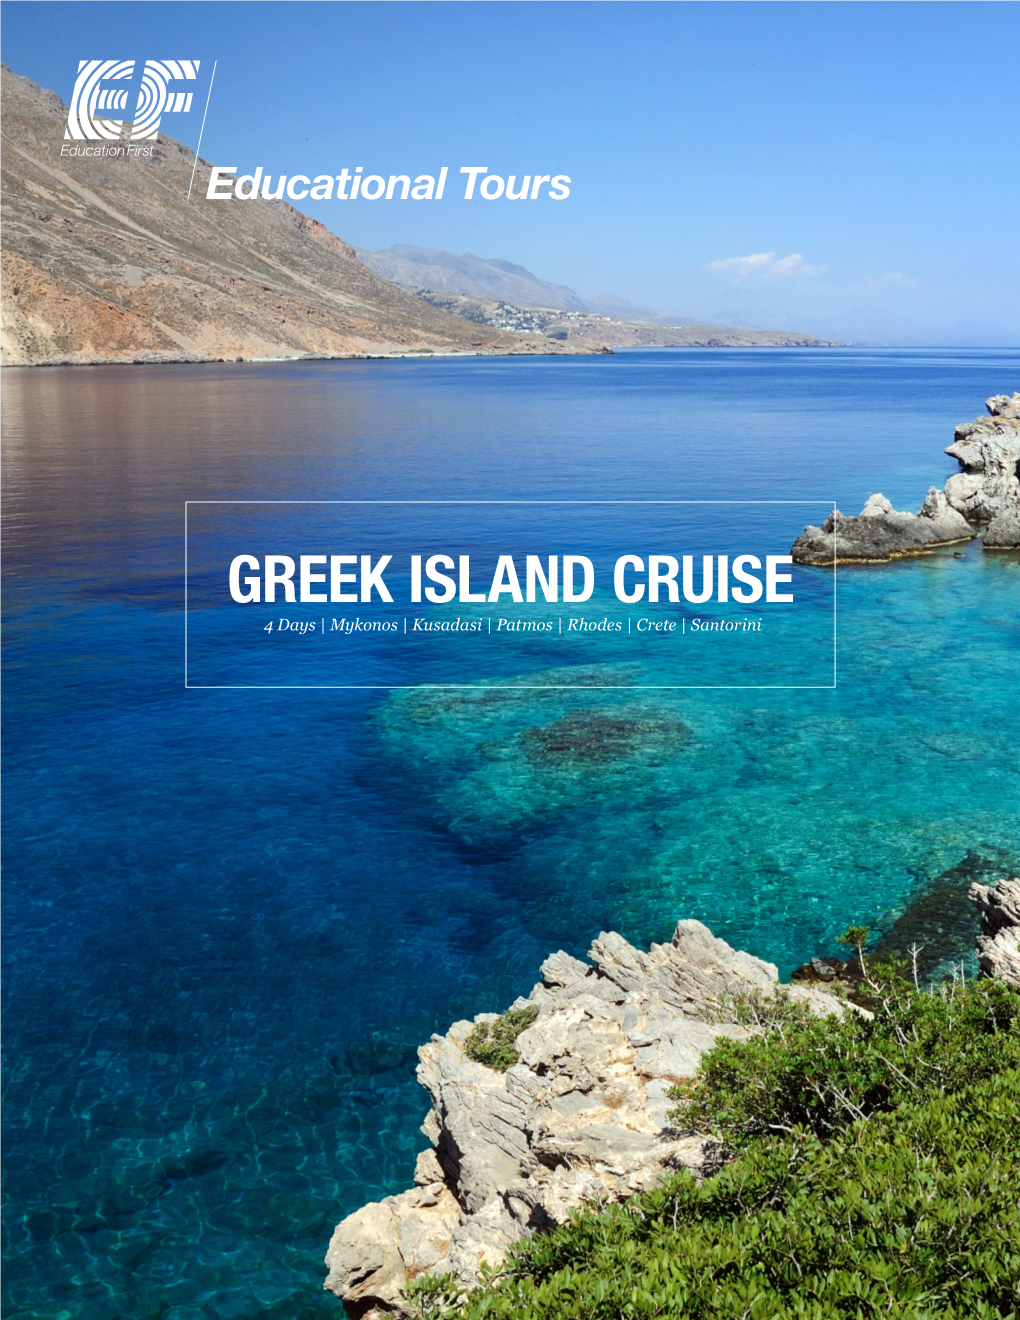 GREEK ISLAND CRUISE 4 Days | Mykonos | Kusadasi | Patmos | Rhodes | Crete | Santorini CRUISE DETAILS Mykonos | Kusadasi | Patmos | Rhodes | Crete | Santorini